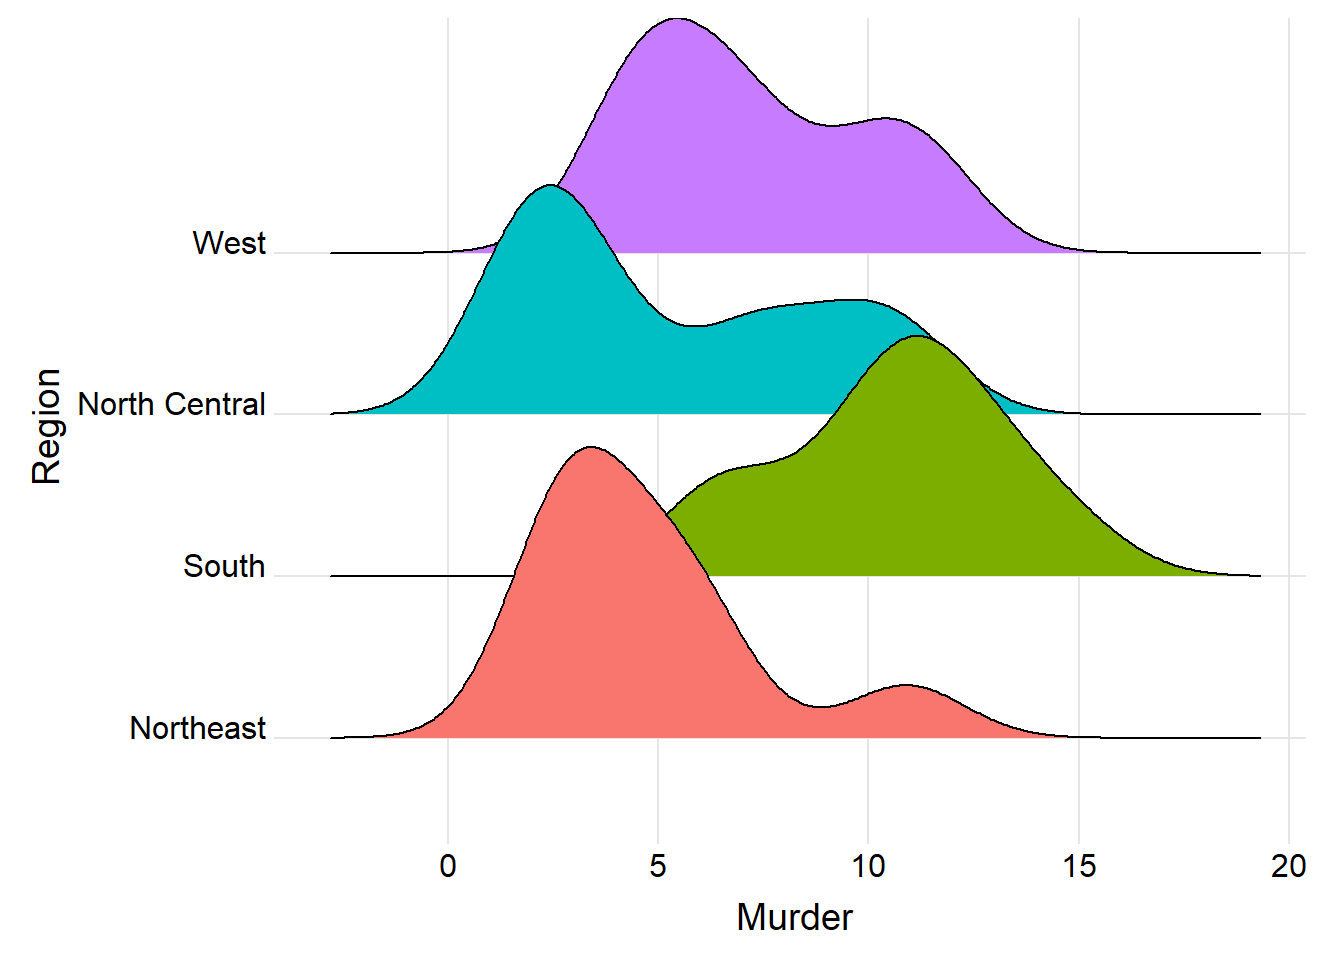 Ridgeline plot for murder rate in each region.